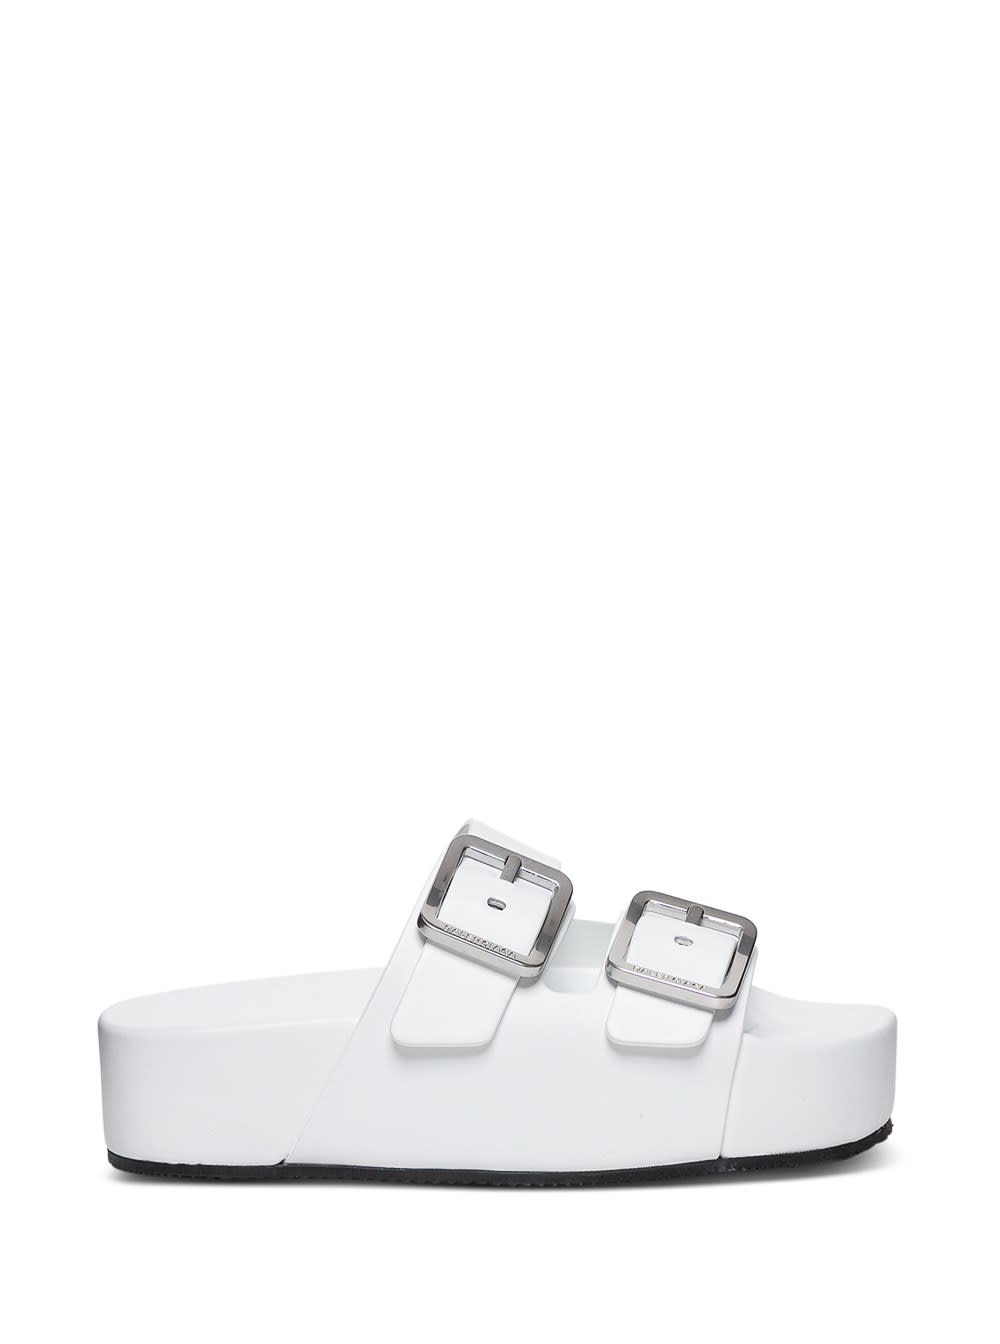 Buy Balenciaga Mallorca Sandals In White Leather online, shop Balenciaga shoes with free shipping